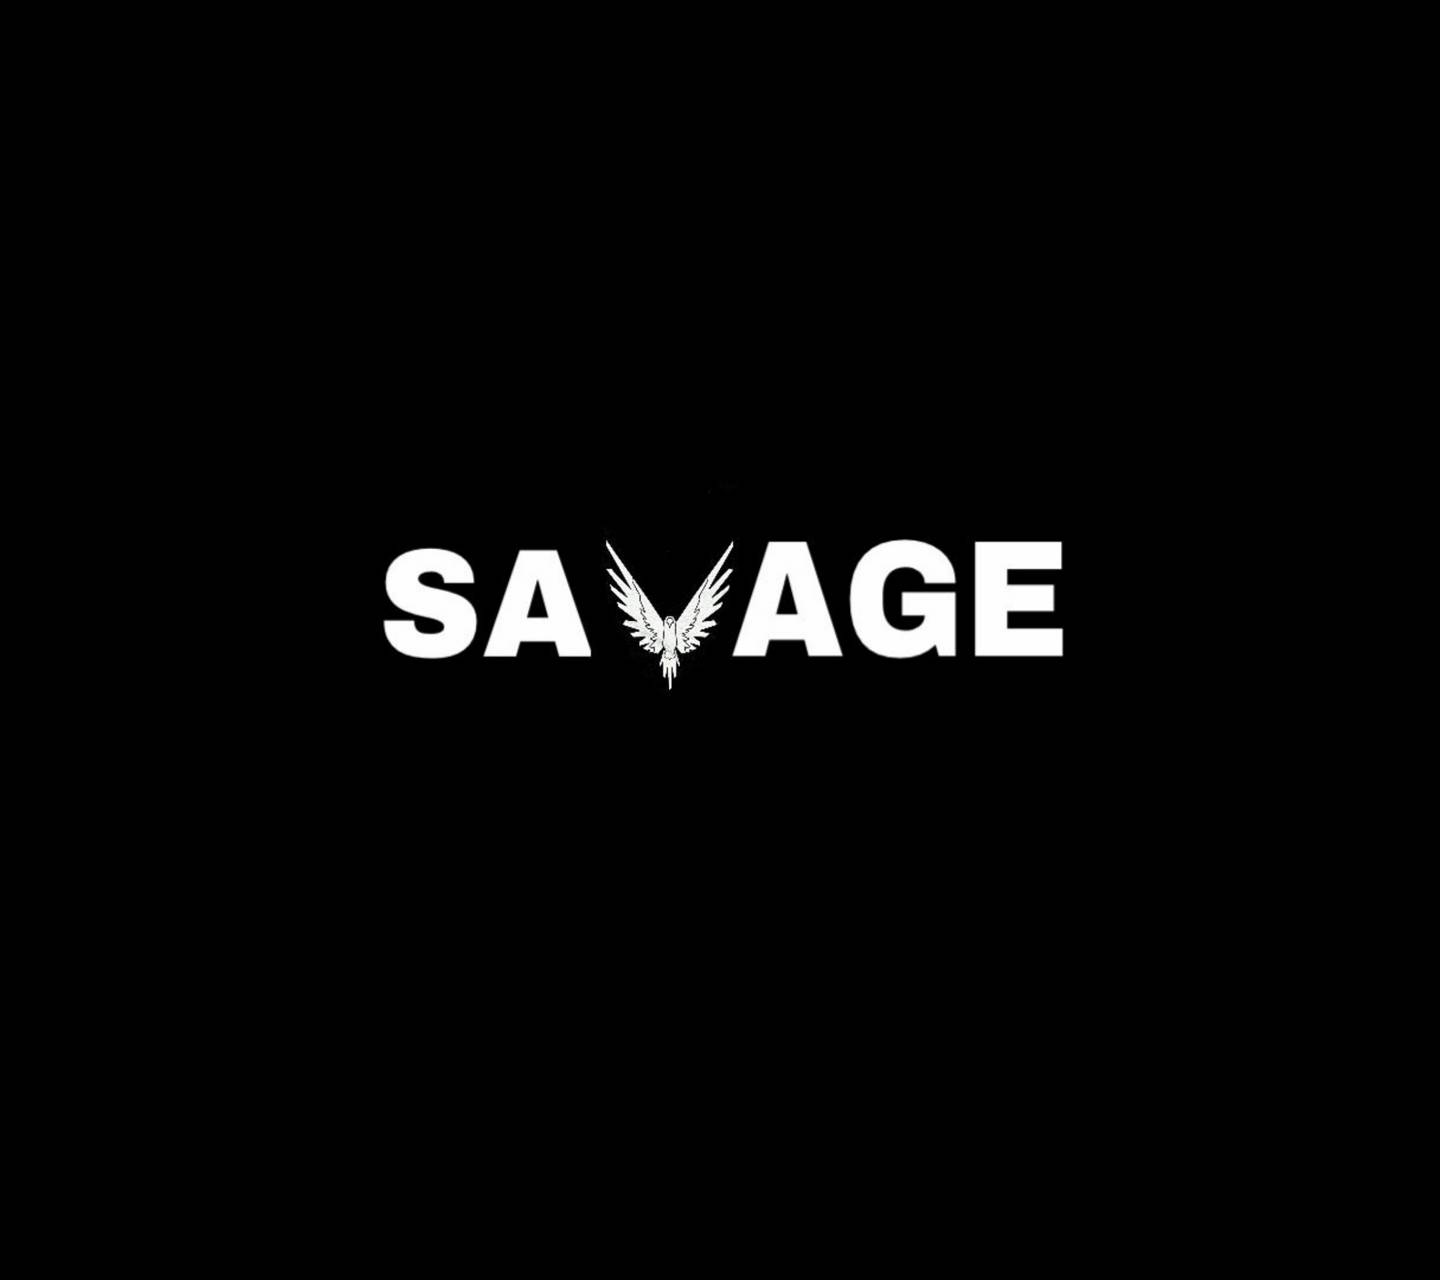 Savages Logo - The Savages Wallpaper